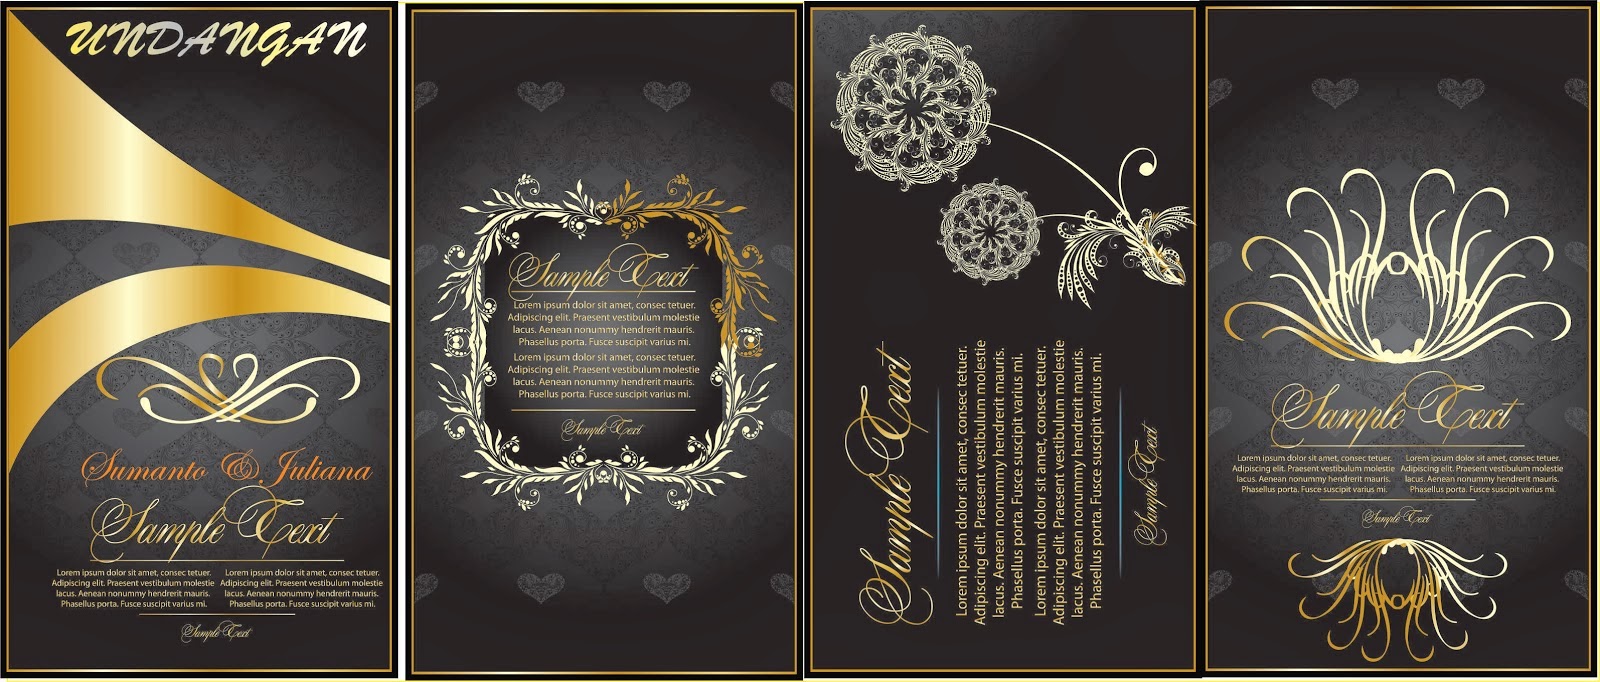 Undangan Pernikahan Lux file cdr ~ Banten Art Design